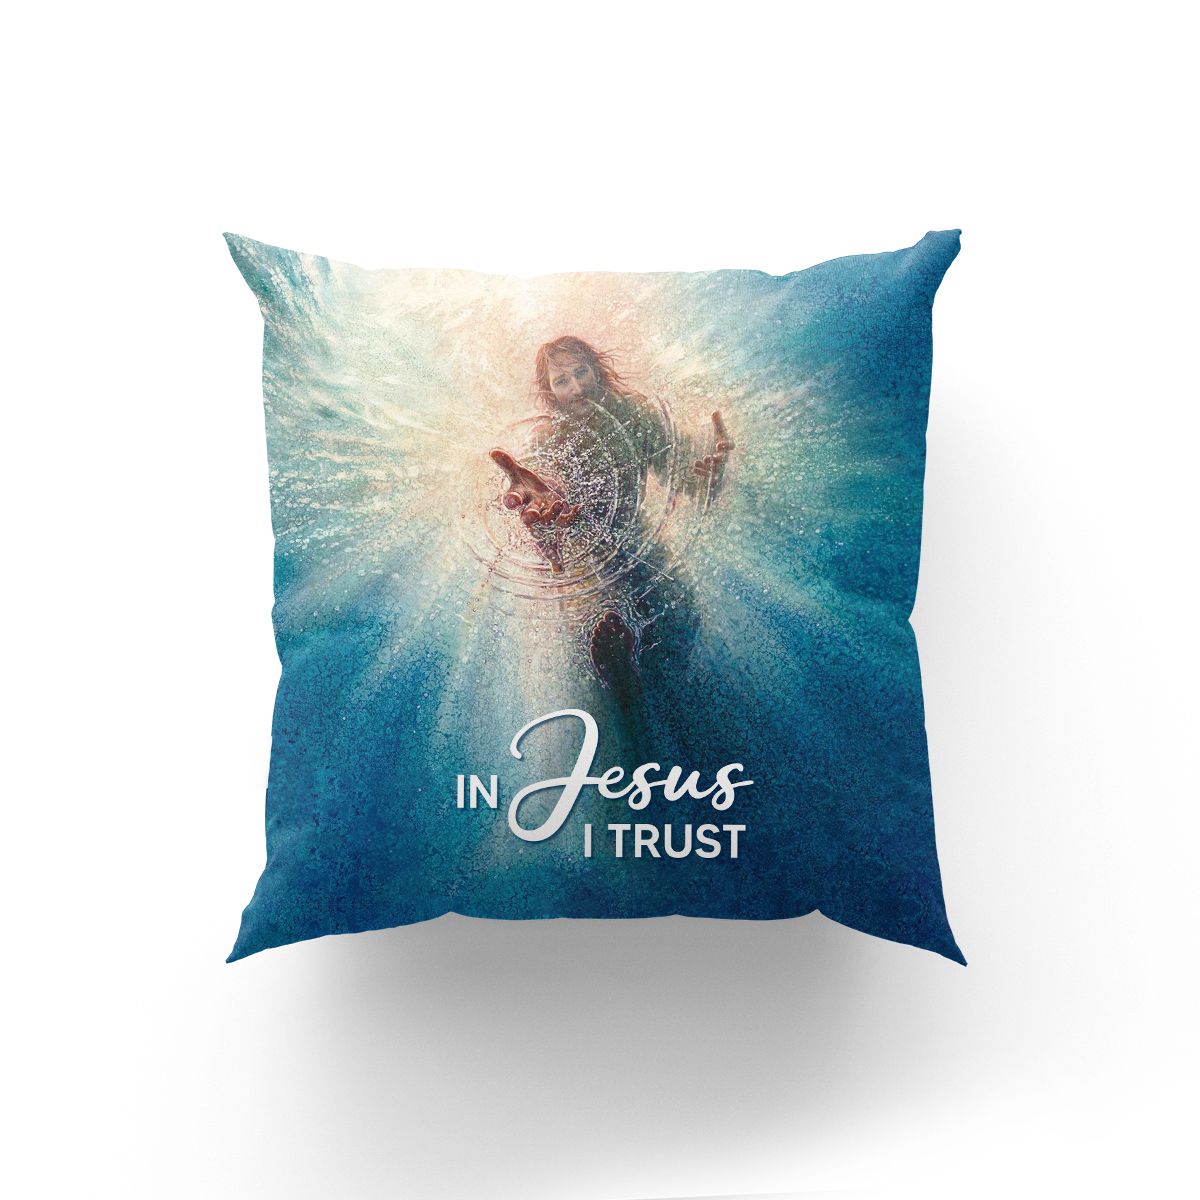 In Jesus I Trust - Pillow Case D30 - 3